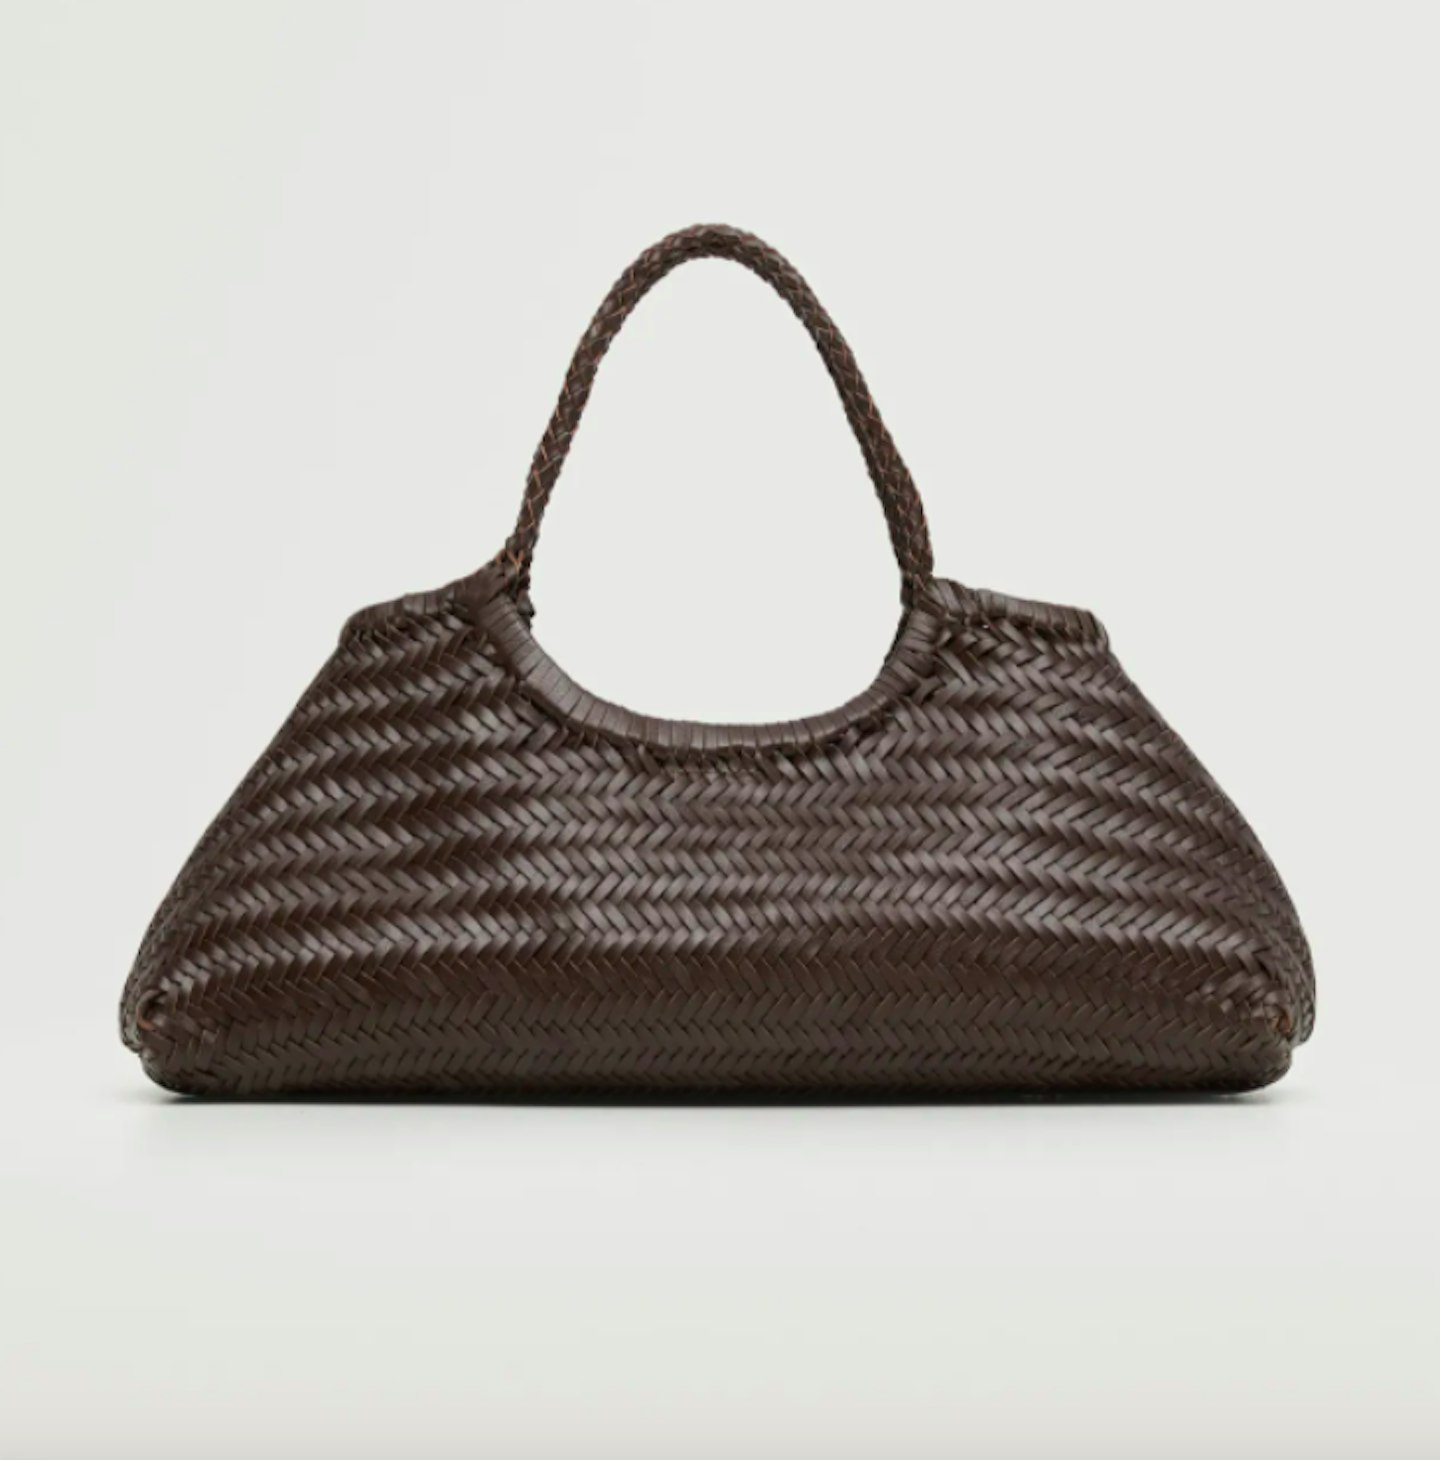 Braided Leather Bag, £79.99